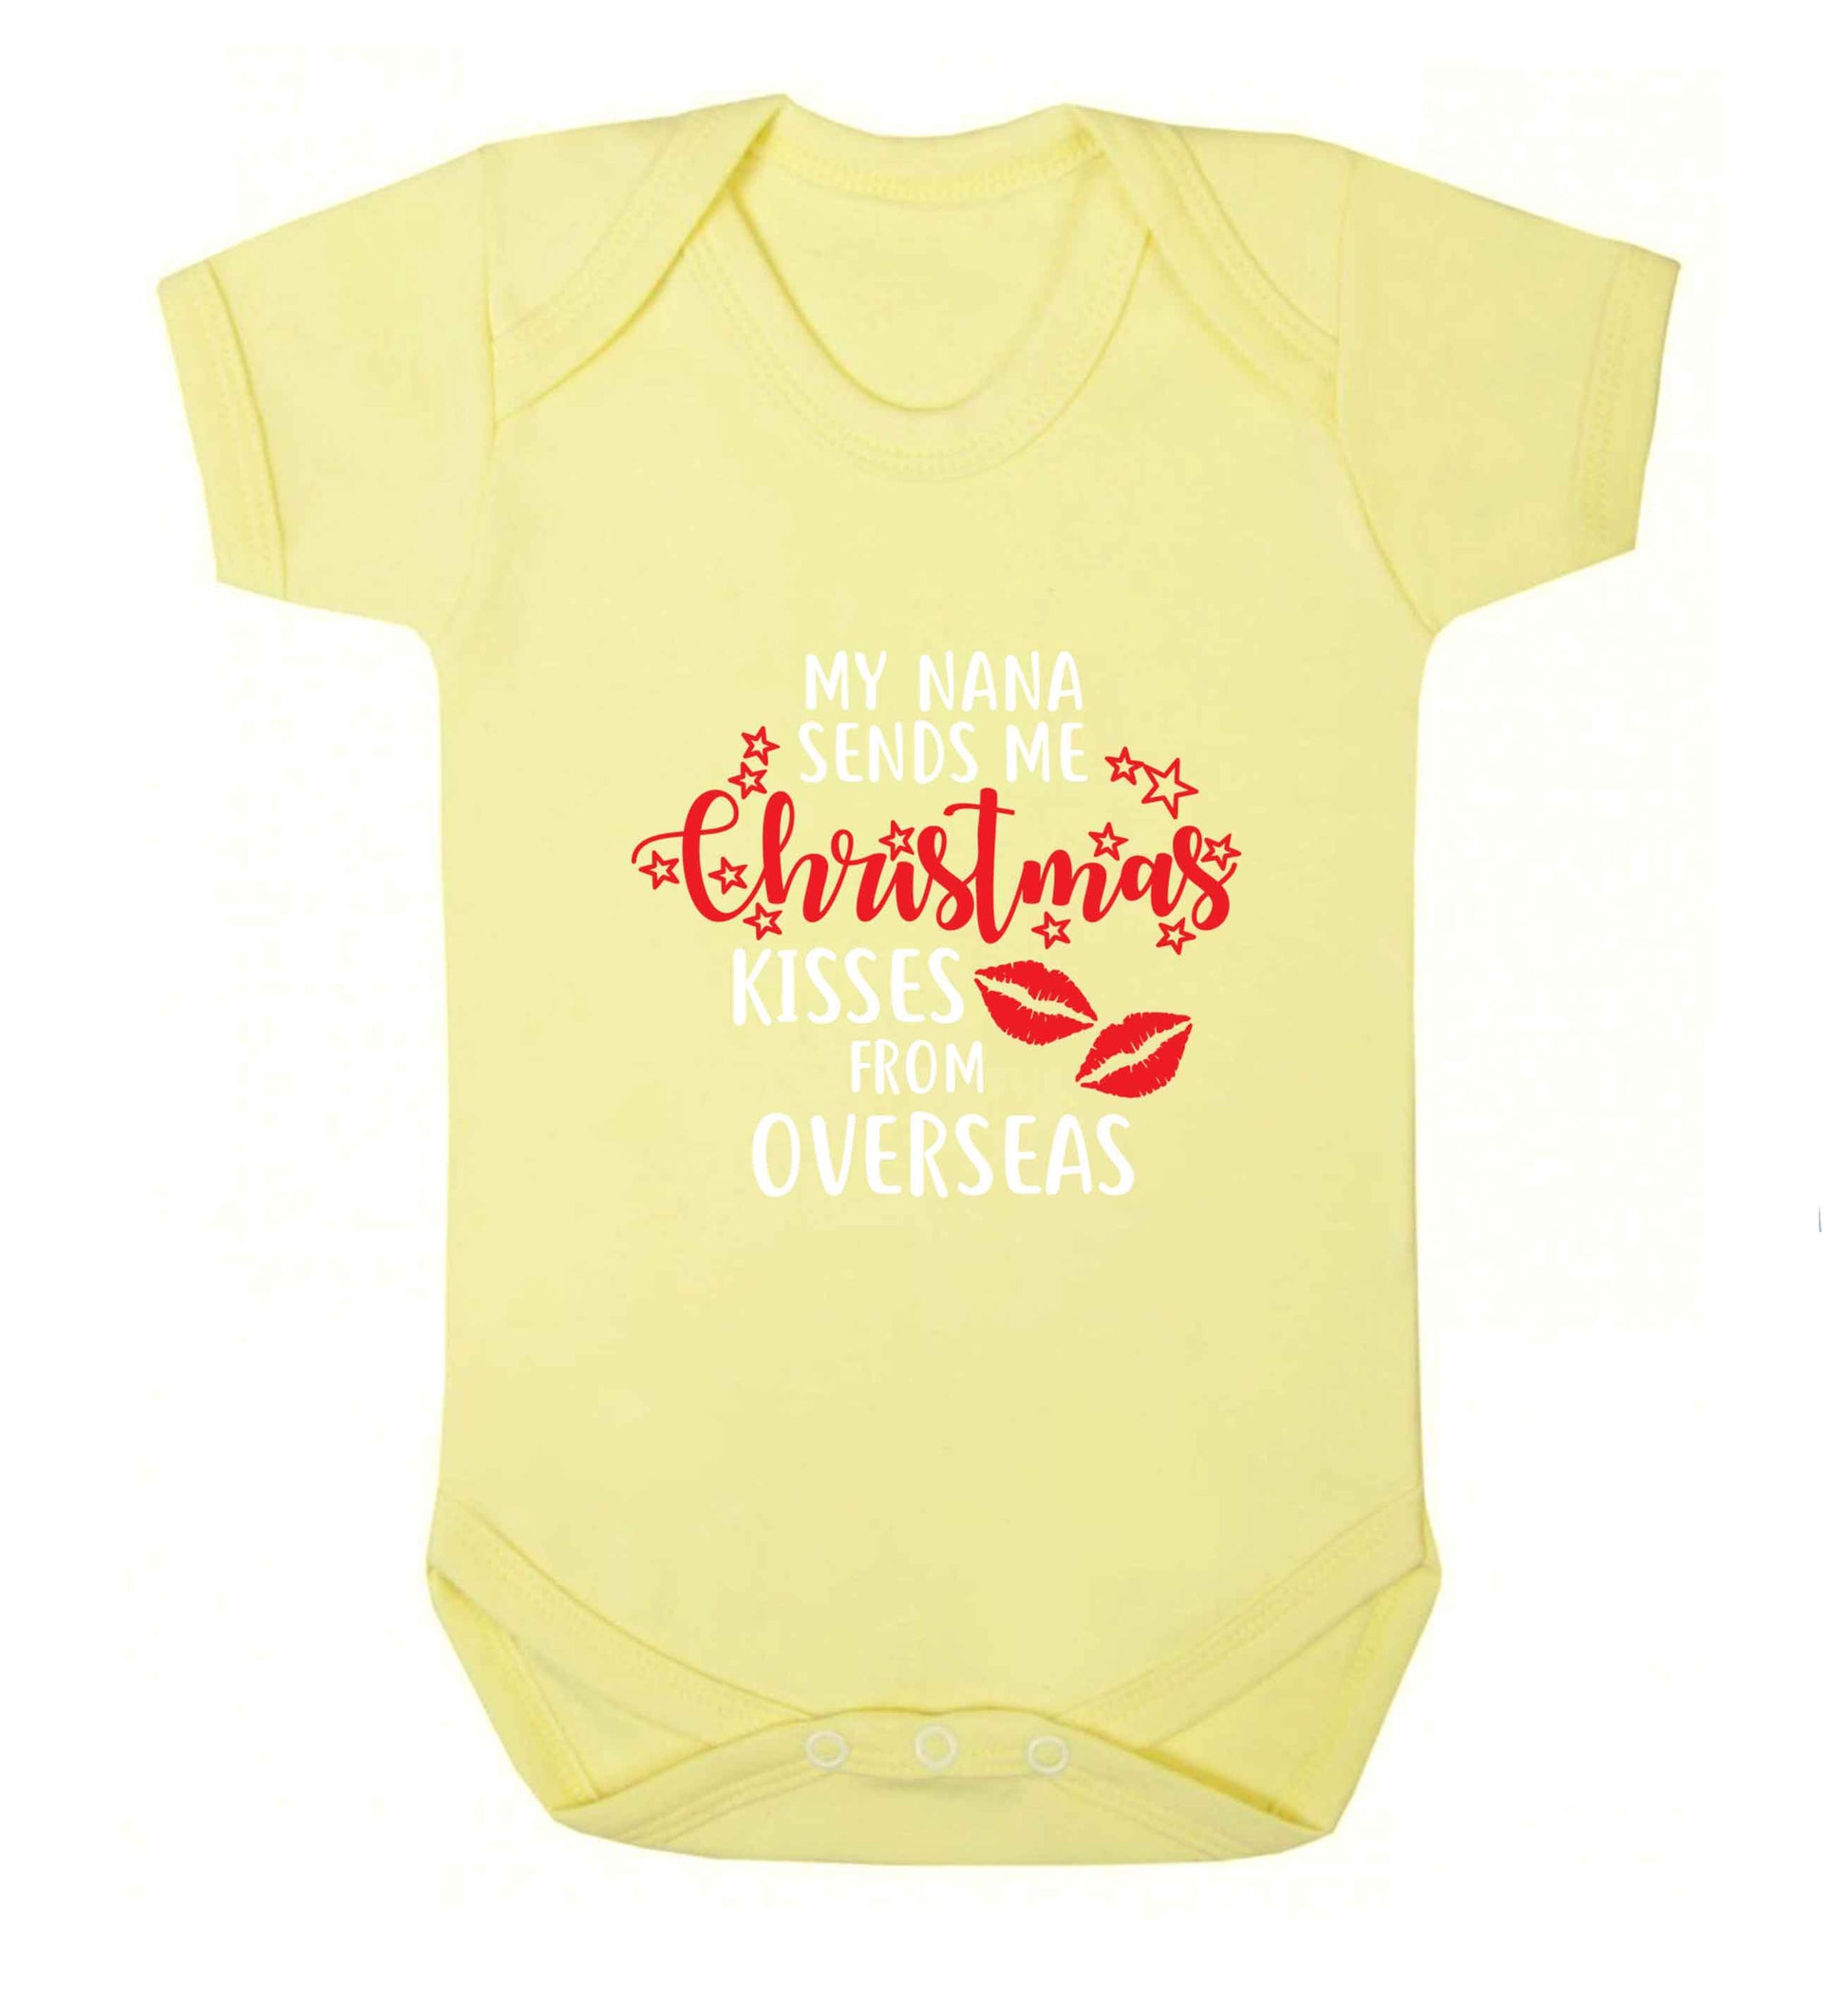 Grandma Christmas Kisses Overseas baby vest pale yellow 18-24 months